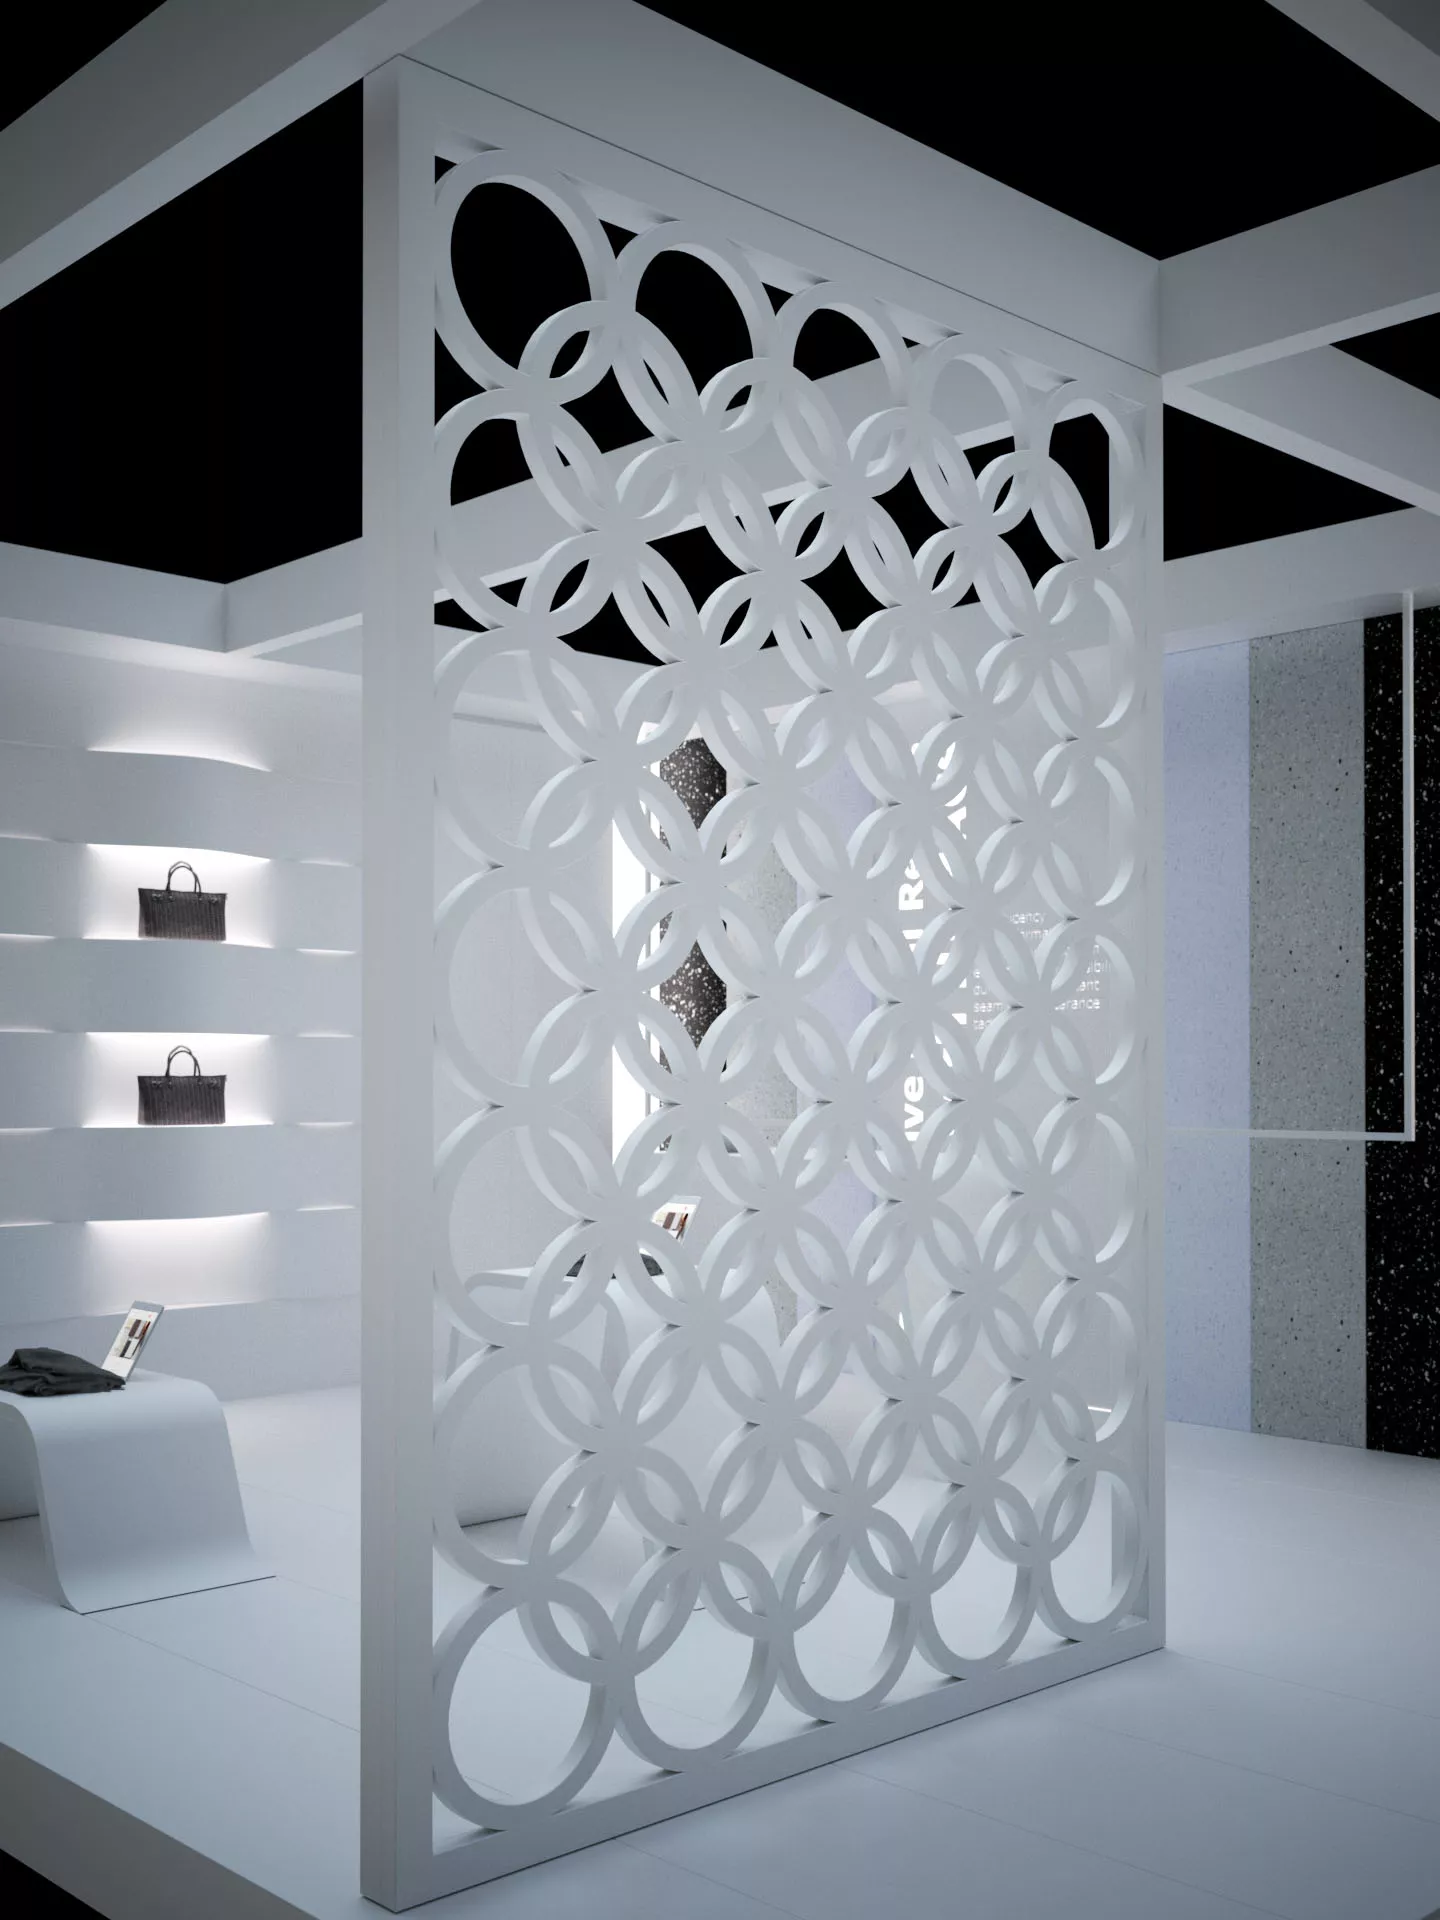 LX Hausys presents HIMACS limitless design possibilities at Retail Design Expo